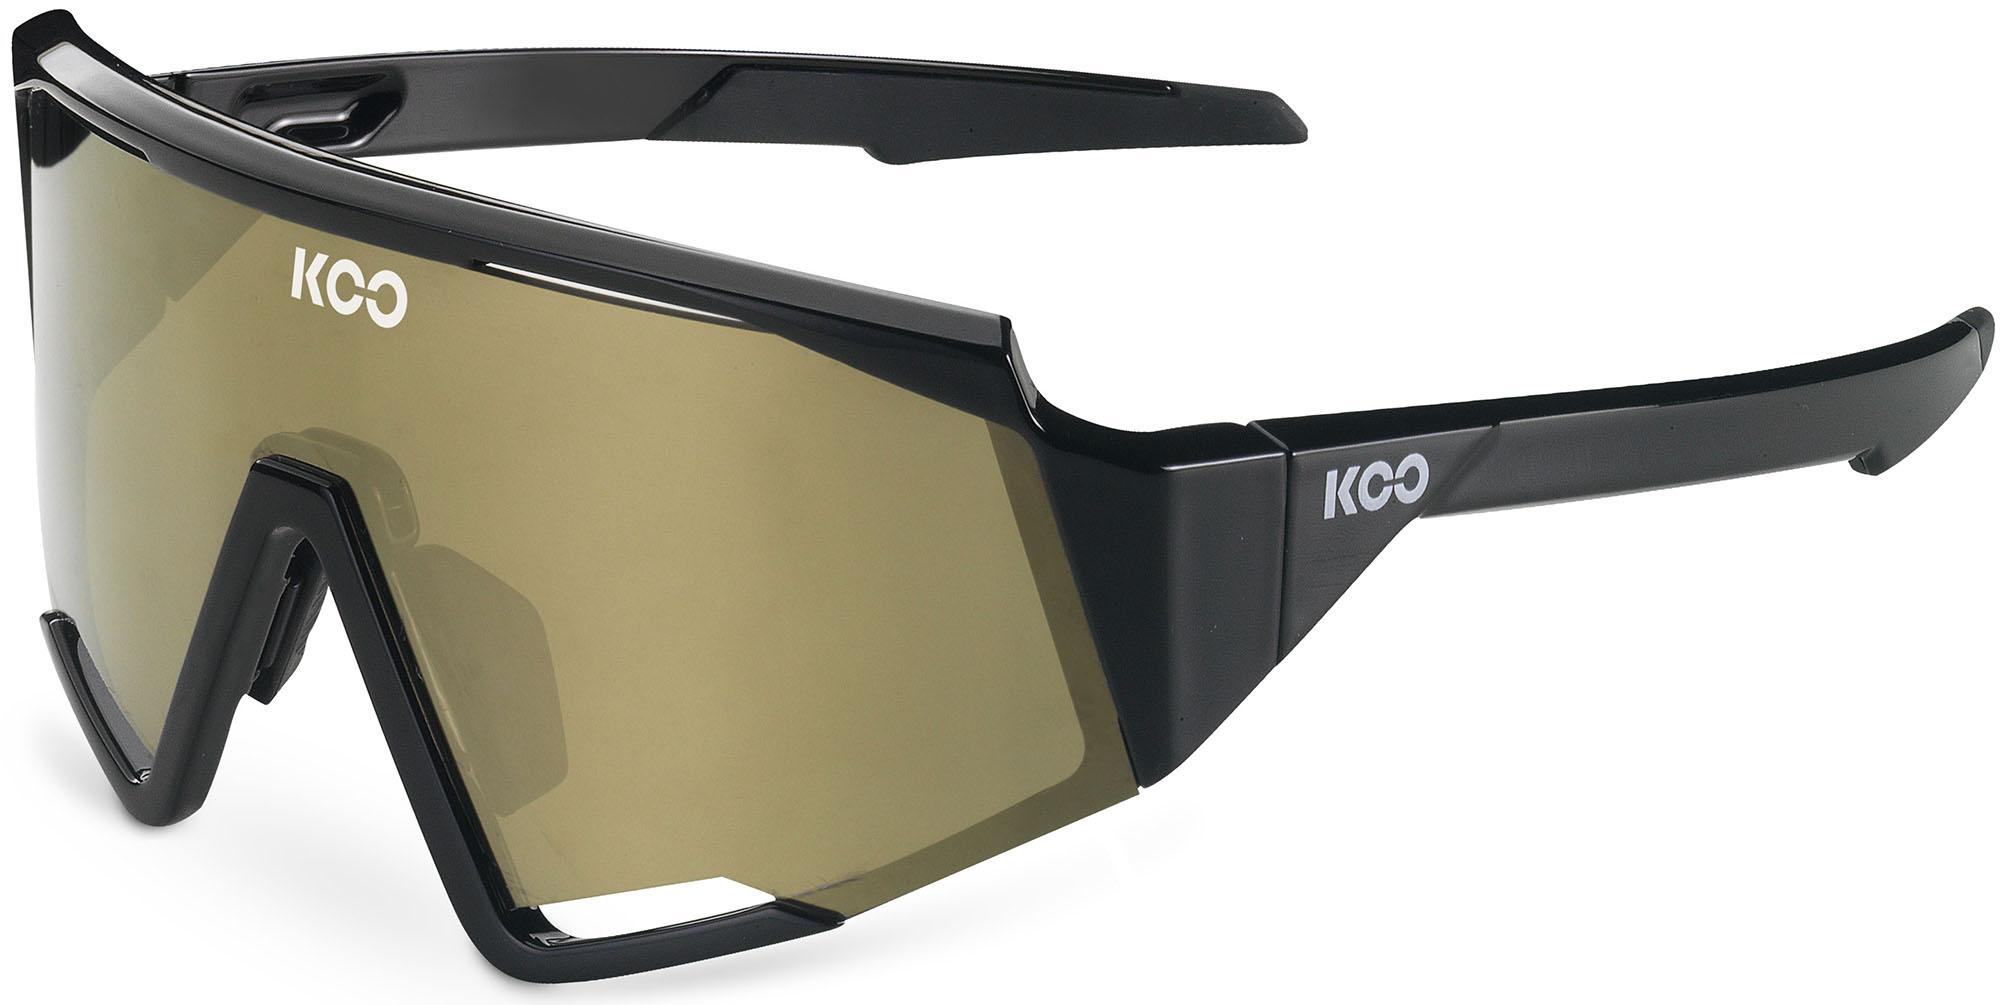 Koo  Spectro Black Sunglasses (super Bronze Lens) - Black/bronze